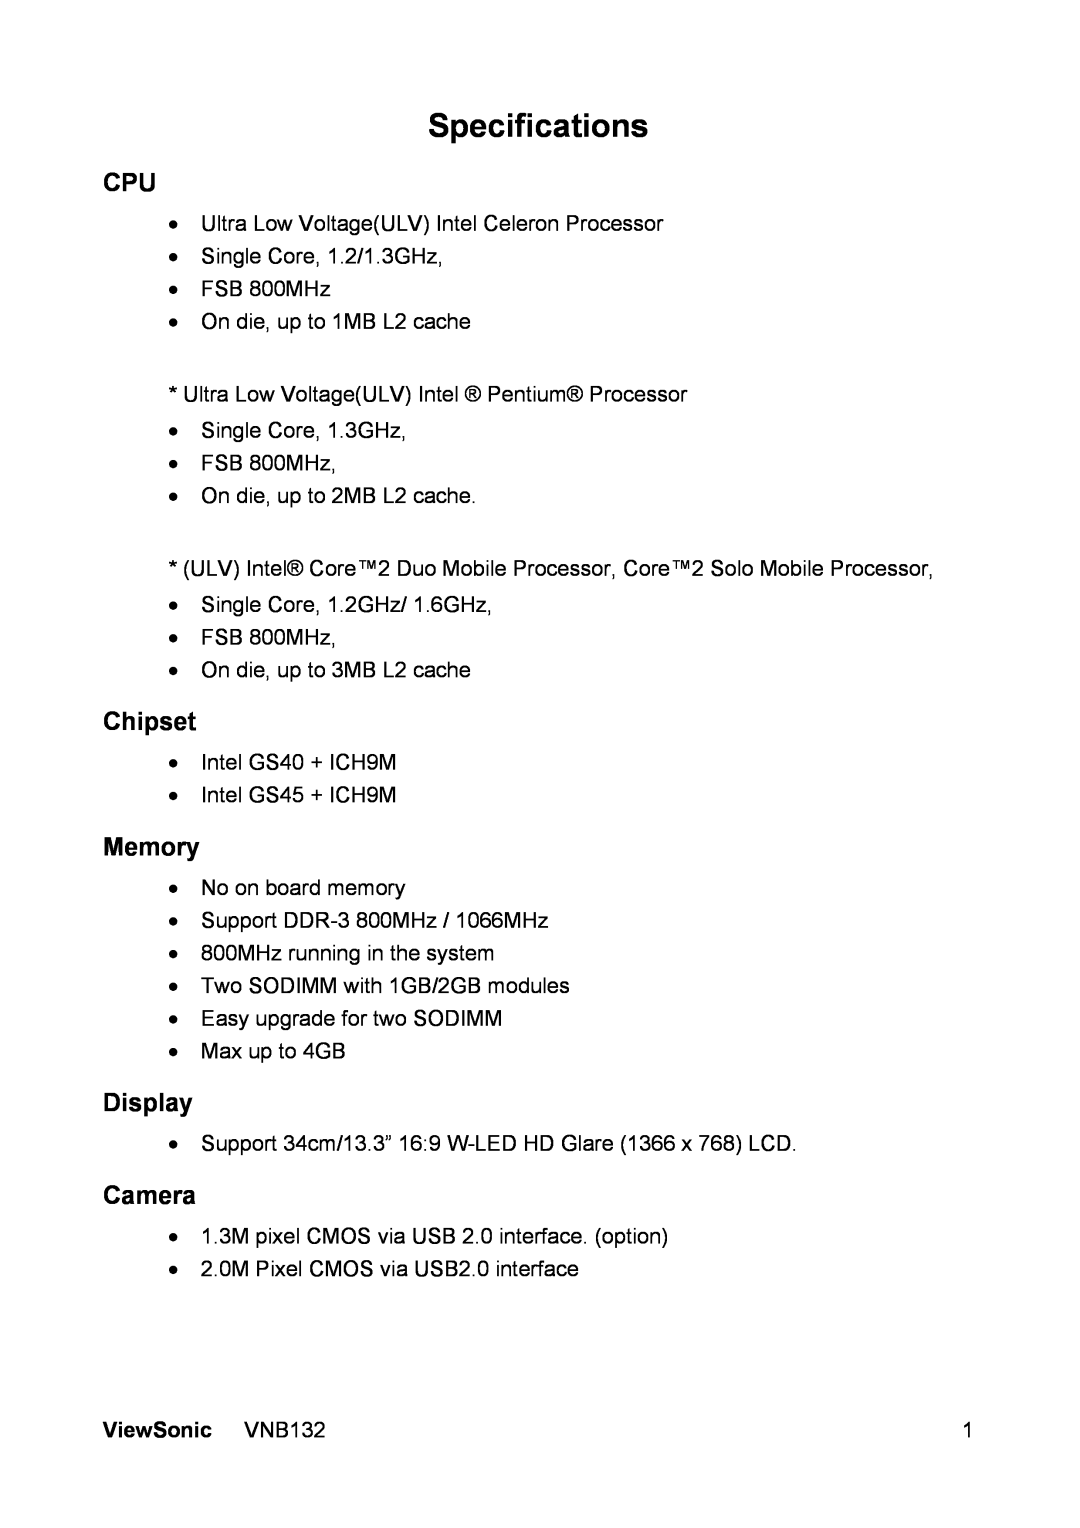 ViewSonic VS13191 manual Specifications, Chipset, Memory, Display, Camera, ViewSonic VNB132 